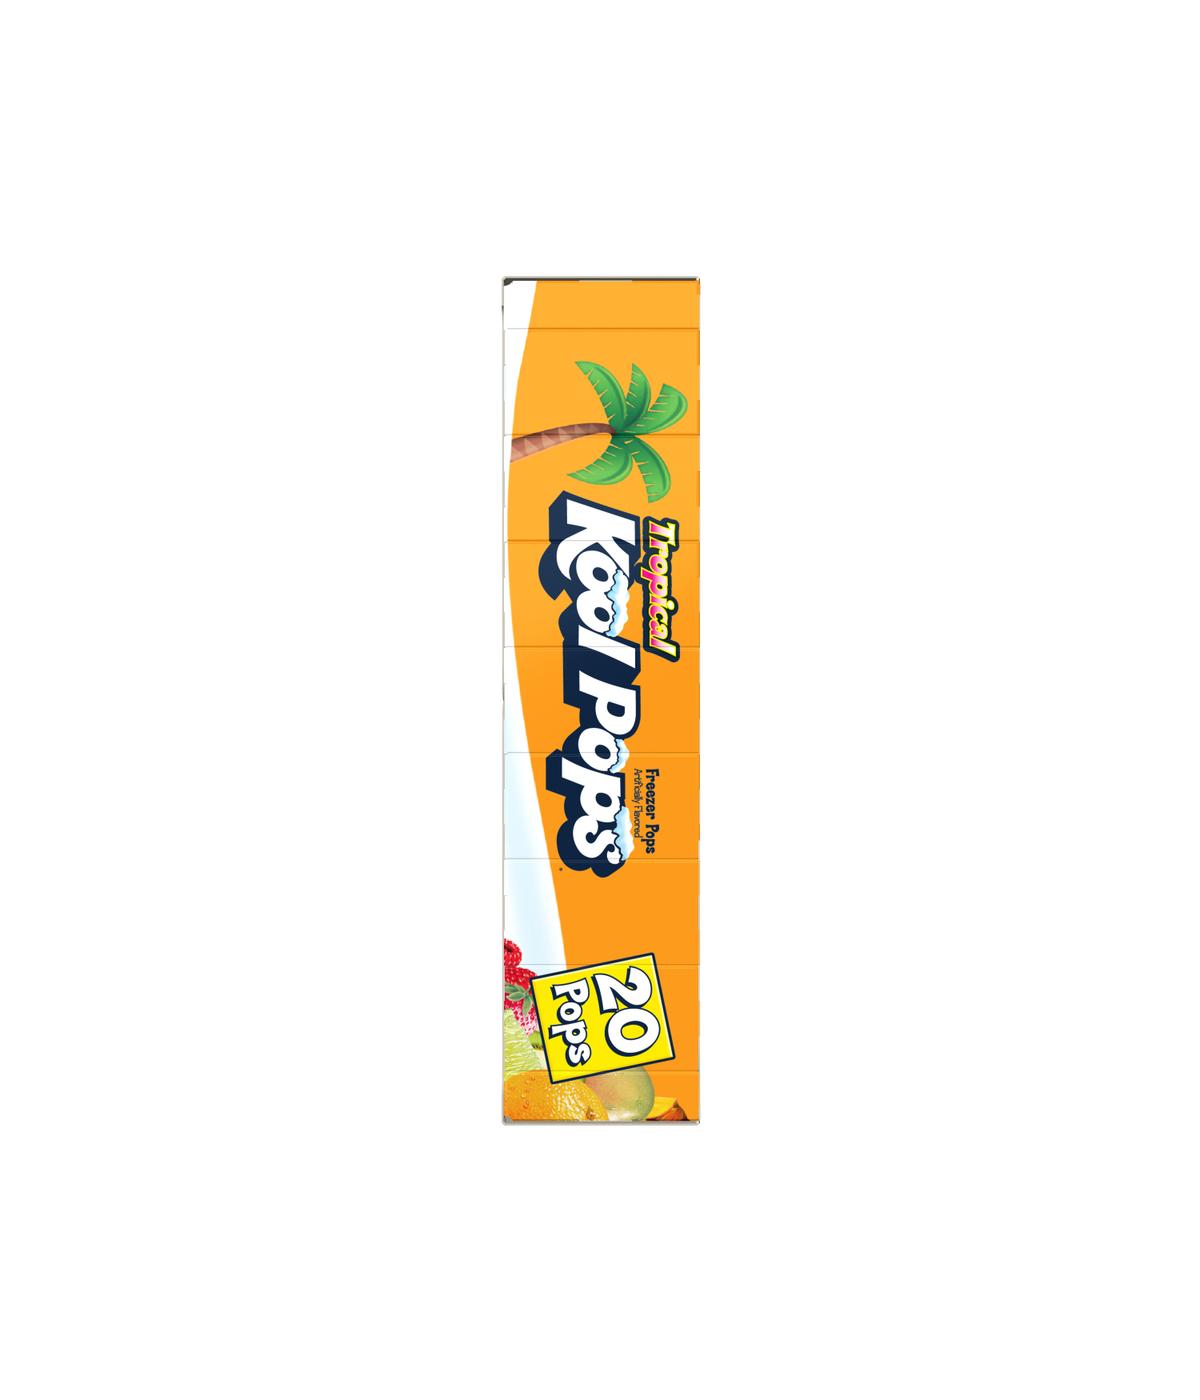 Kool Pops Freezer Bars - Tropical Flavors; image 4 of 4